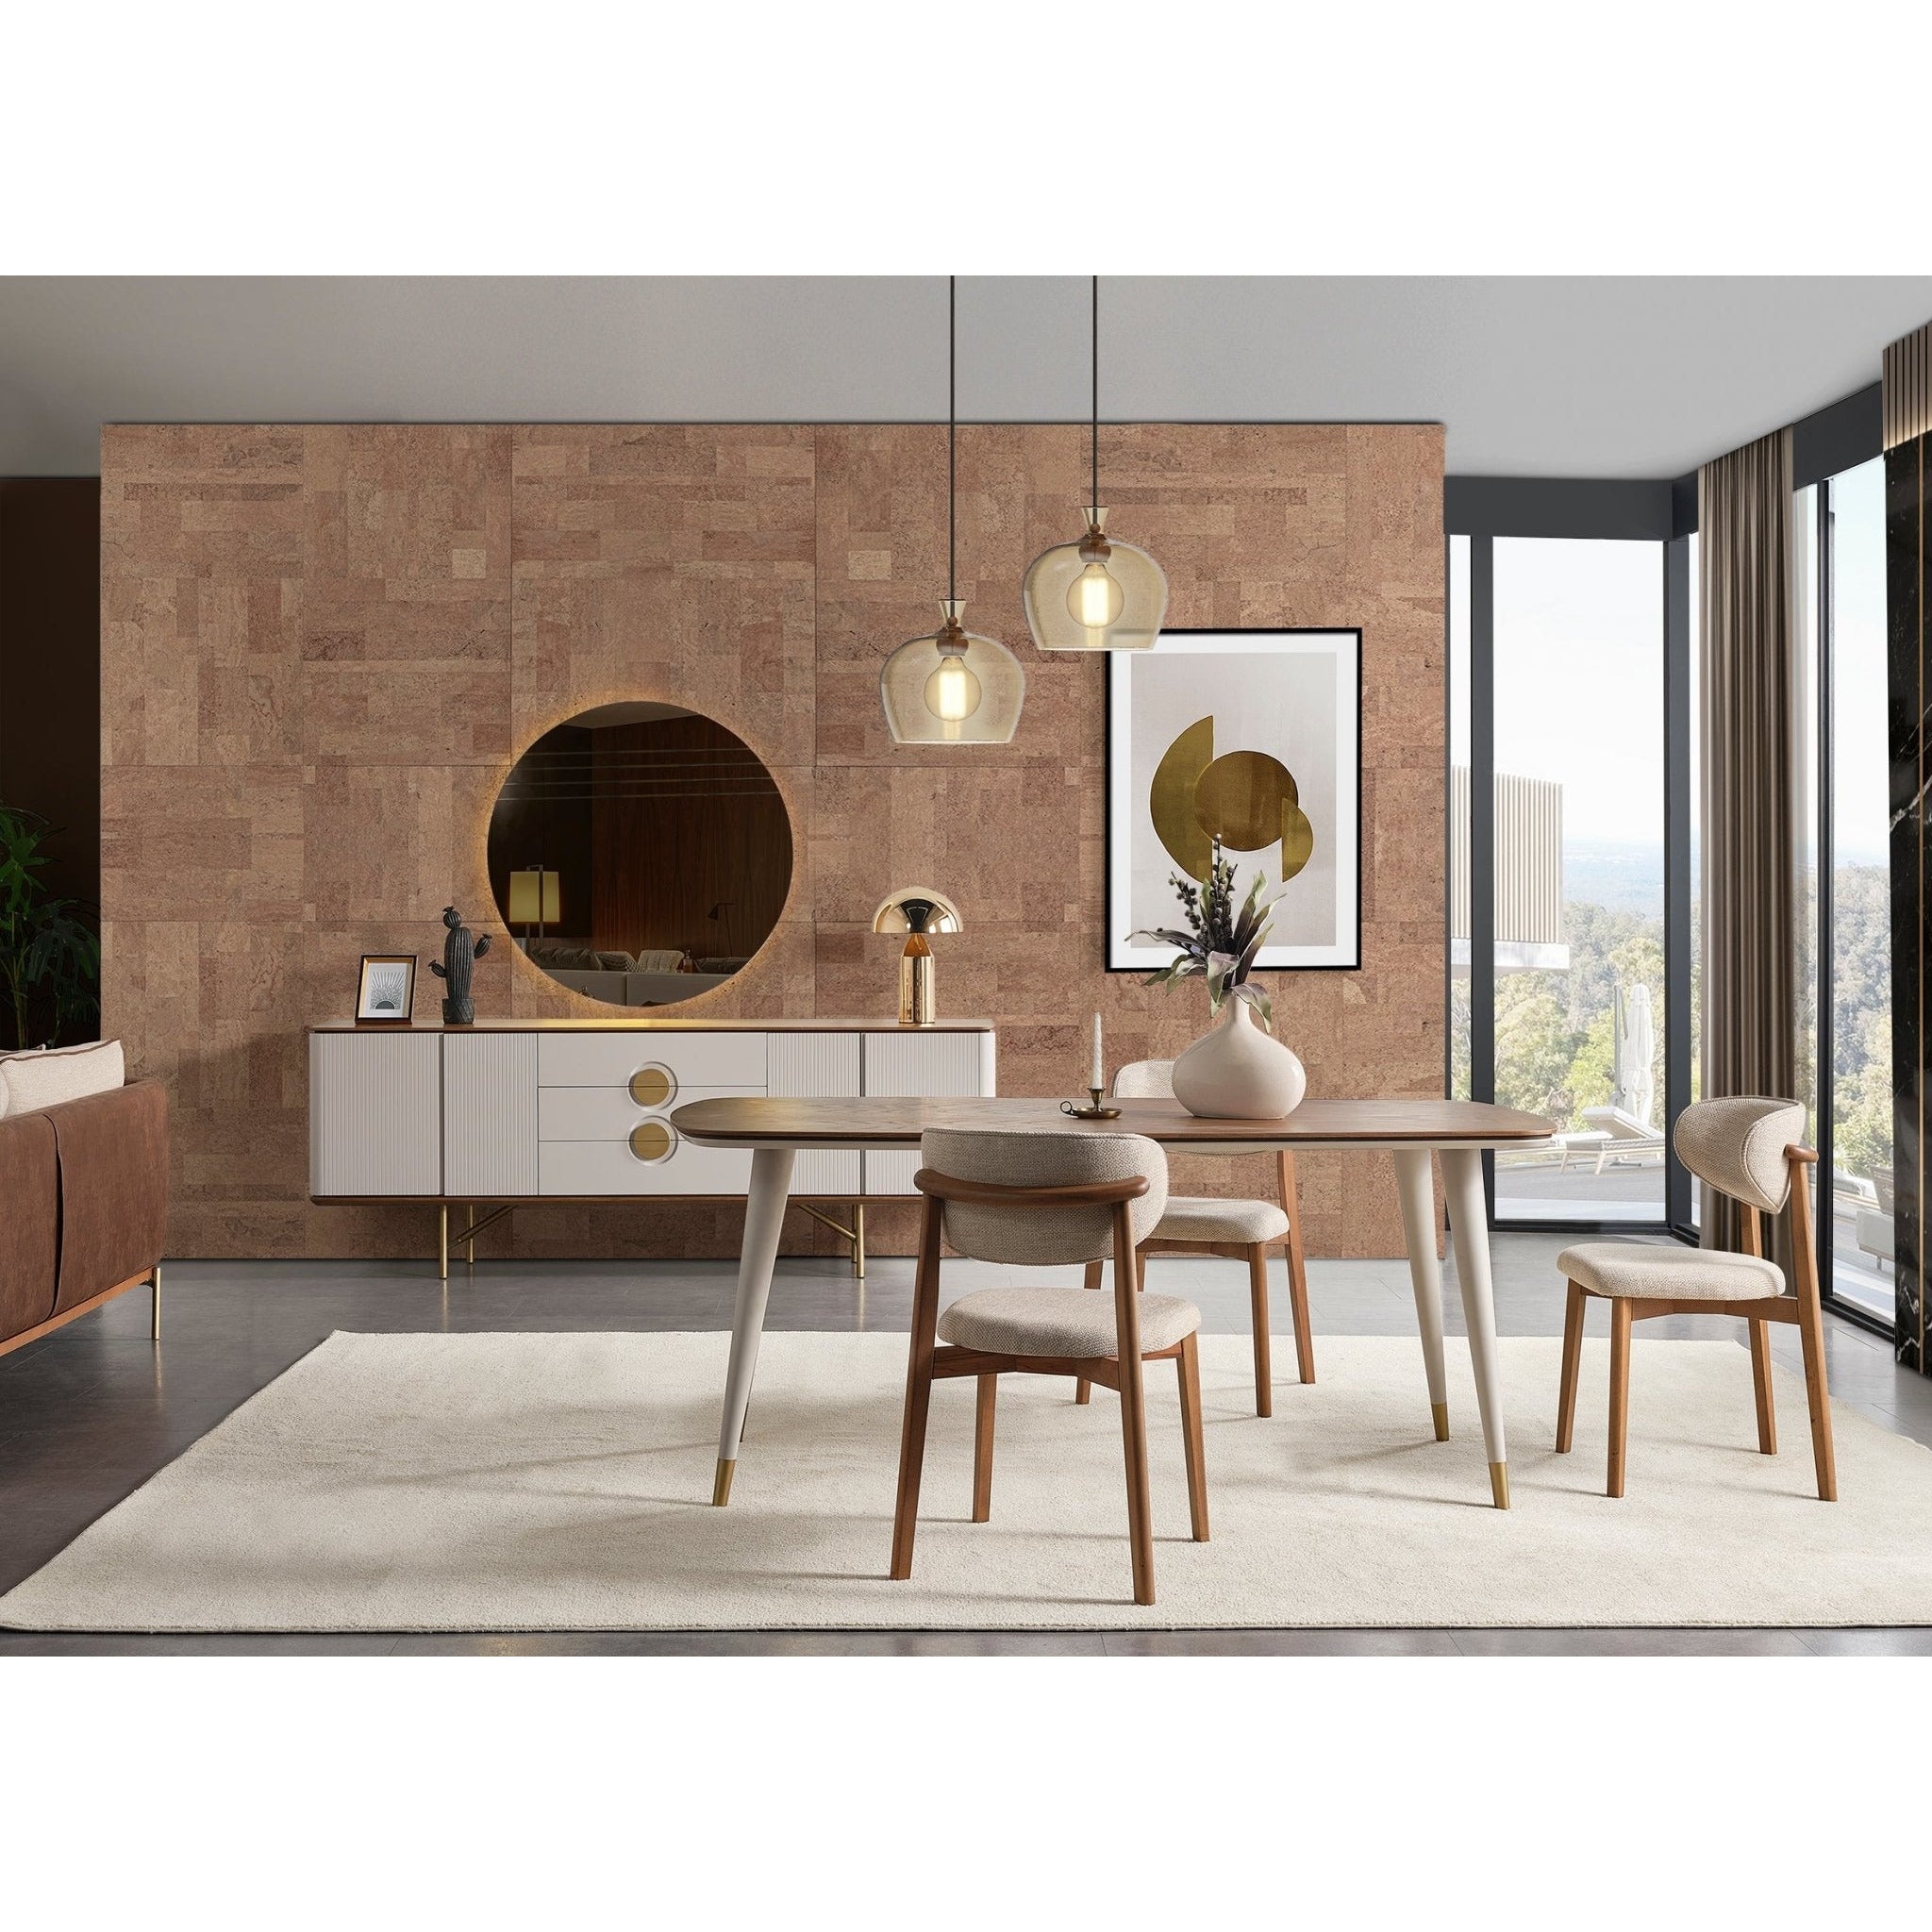 Viola Matgrupp - LINE Furniture Group